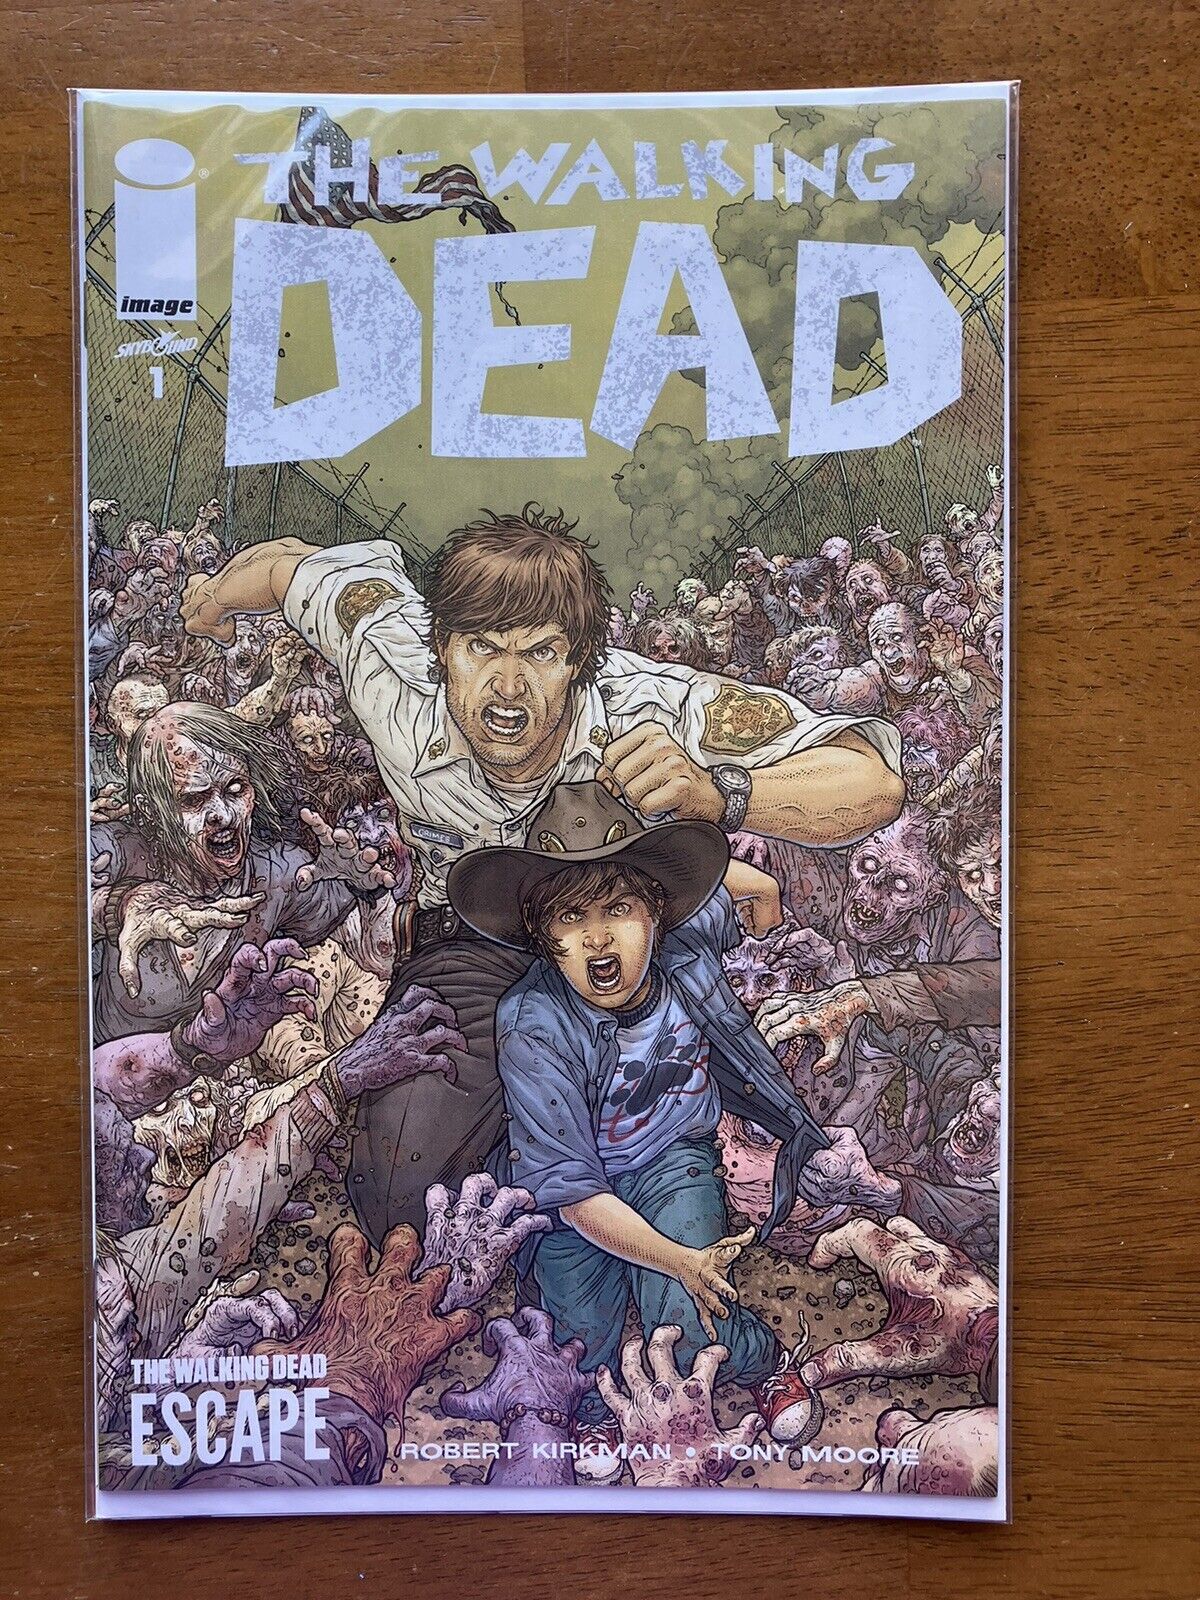 The Walking Dead #1 2014 Escape Edition Exclusive Juan Jose Ryp Color Variant